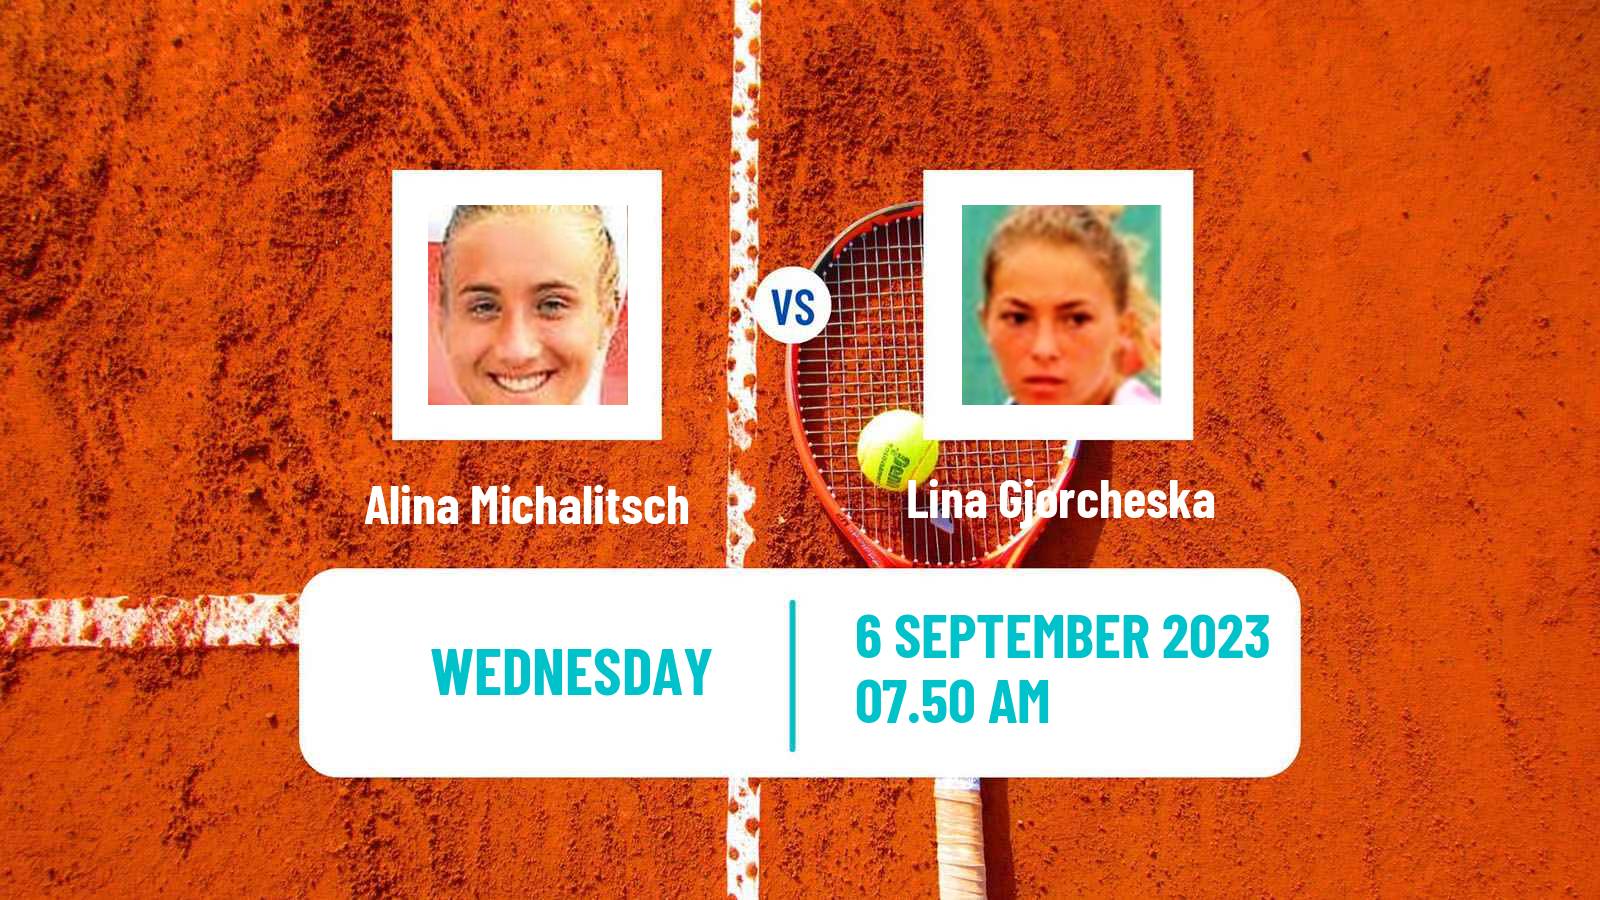 Tennis ITF W60 Vienna Women Alina Michalitsch - Lina Gjorcheska